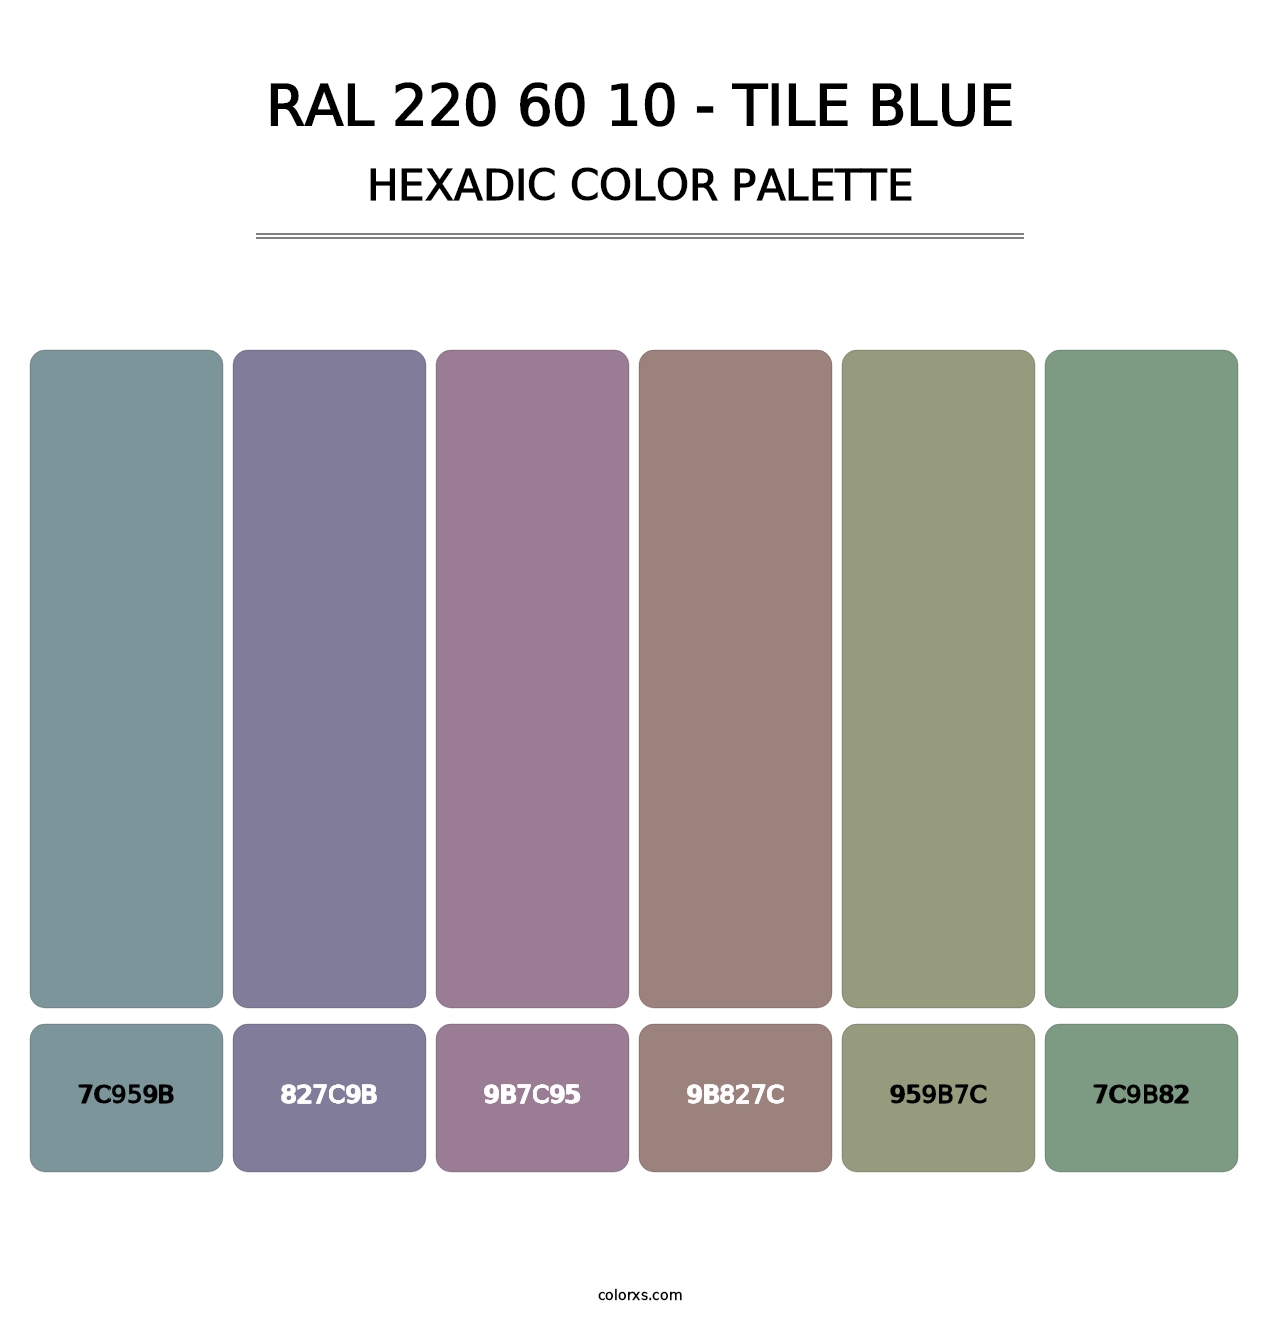 RAL 220 60 10 - Tile Blue - Hexadic Color Palette